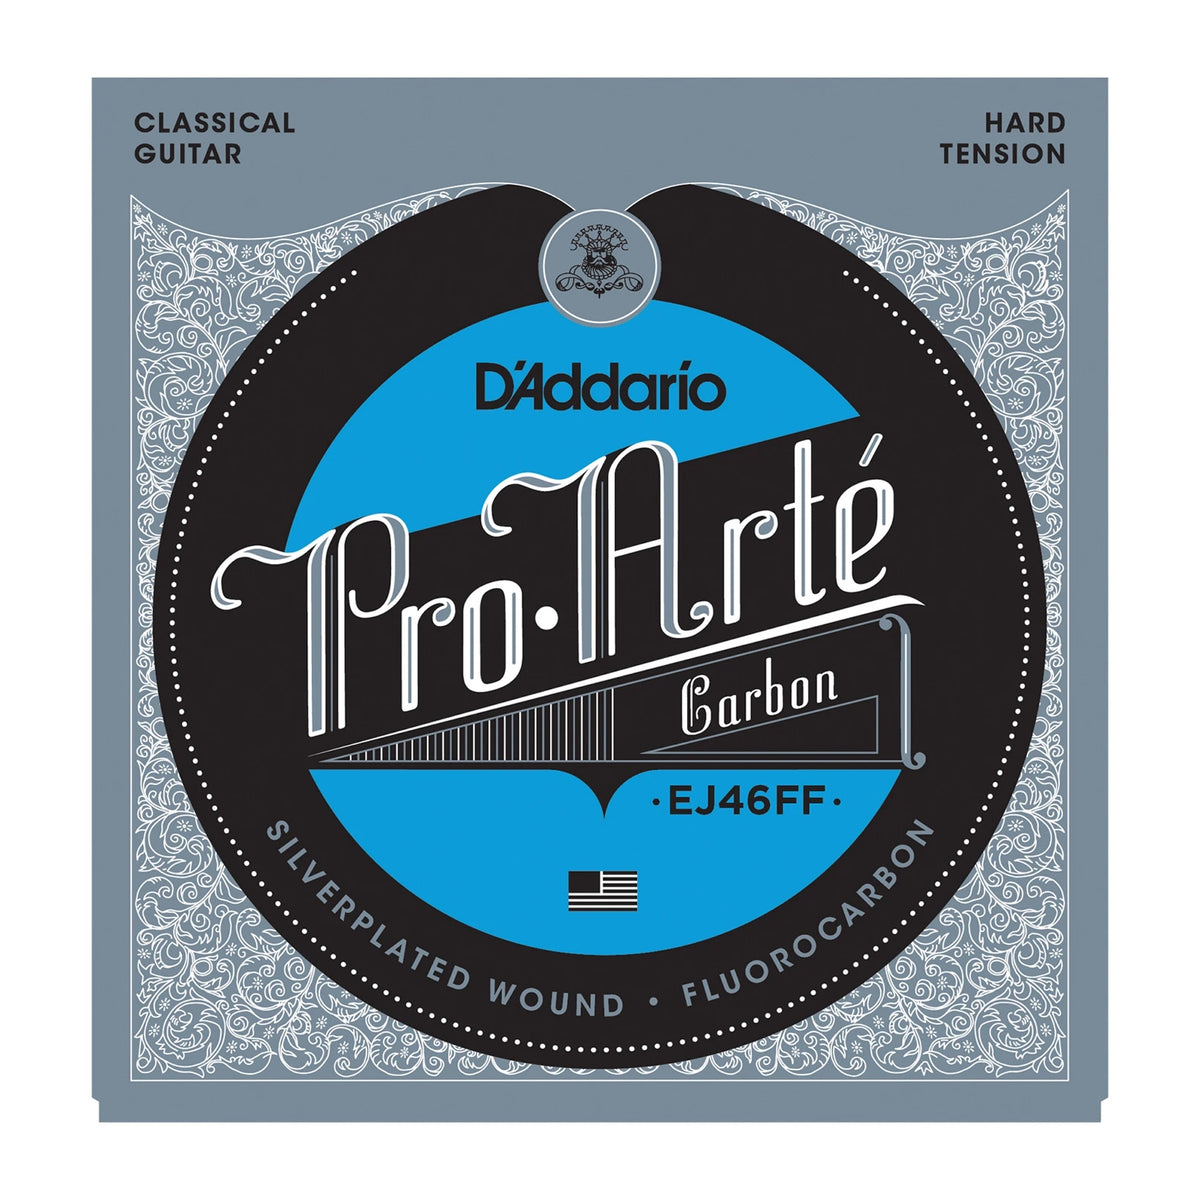 D'Addario Pro-Arte Carbon Classical Guitar String Set Hard Tension